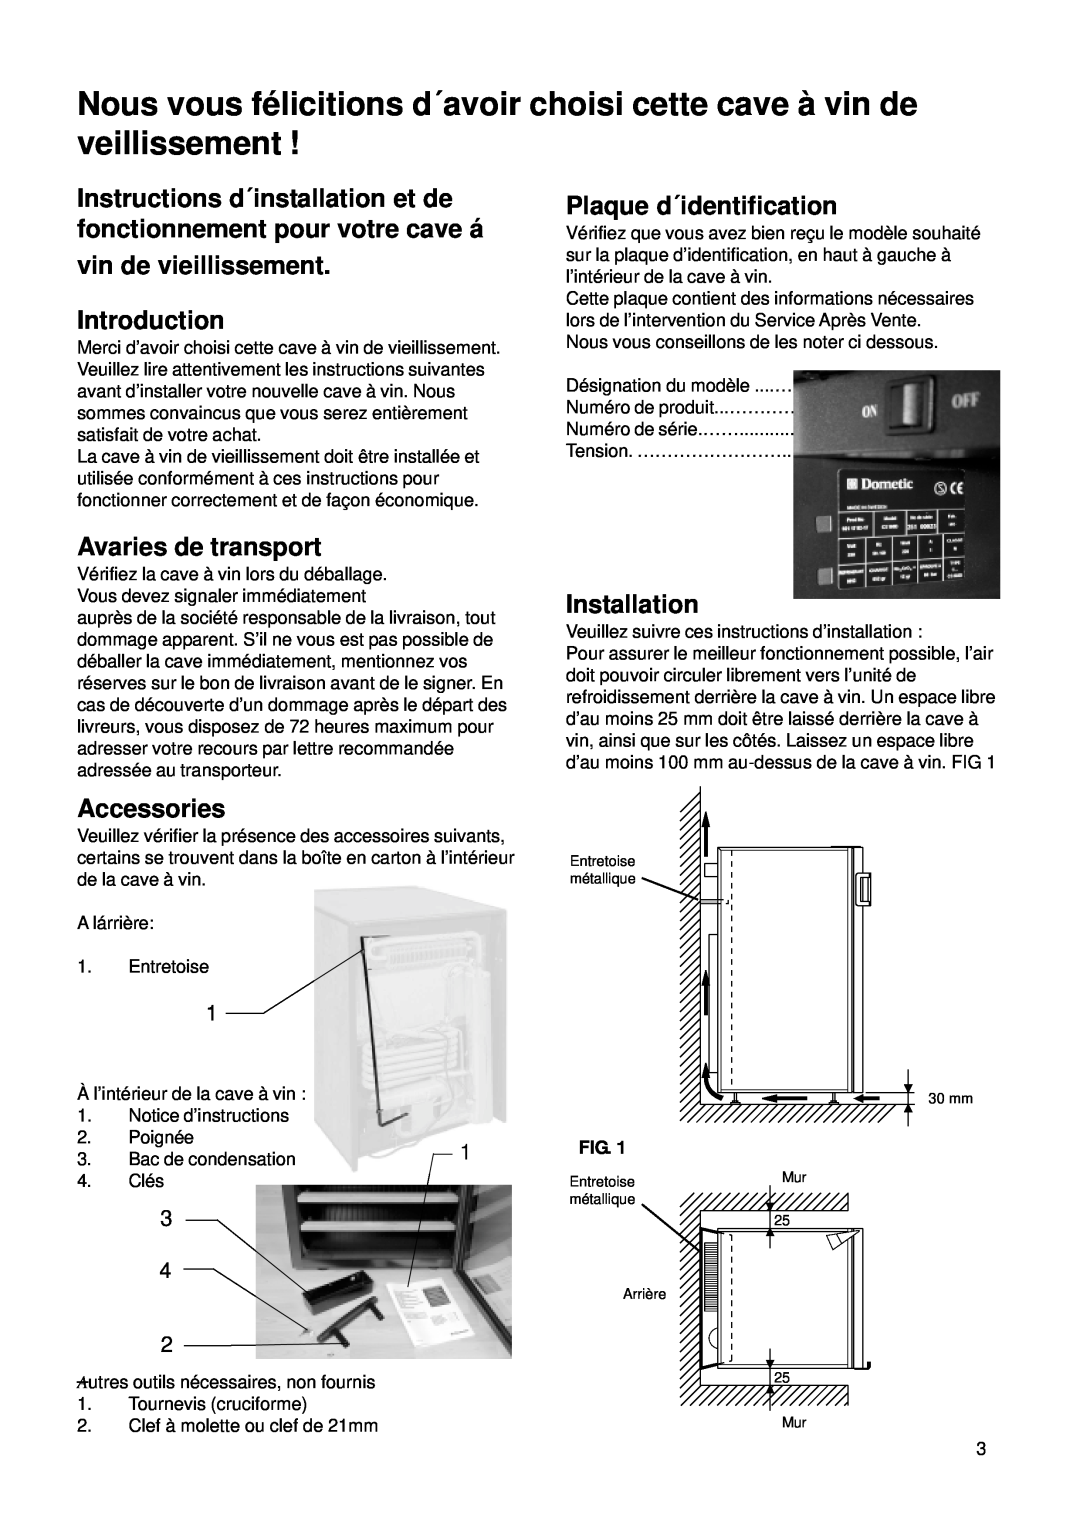 Dometic CS 52 instruction manual Introduction, Avaries de transport, Accessories, Plaque d´identification, Installation 